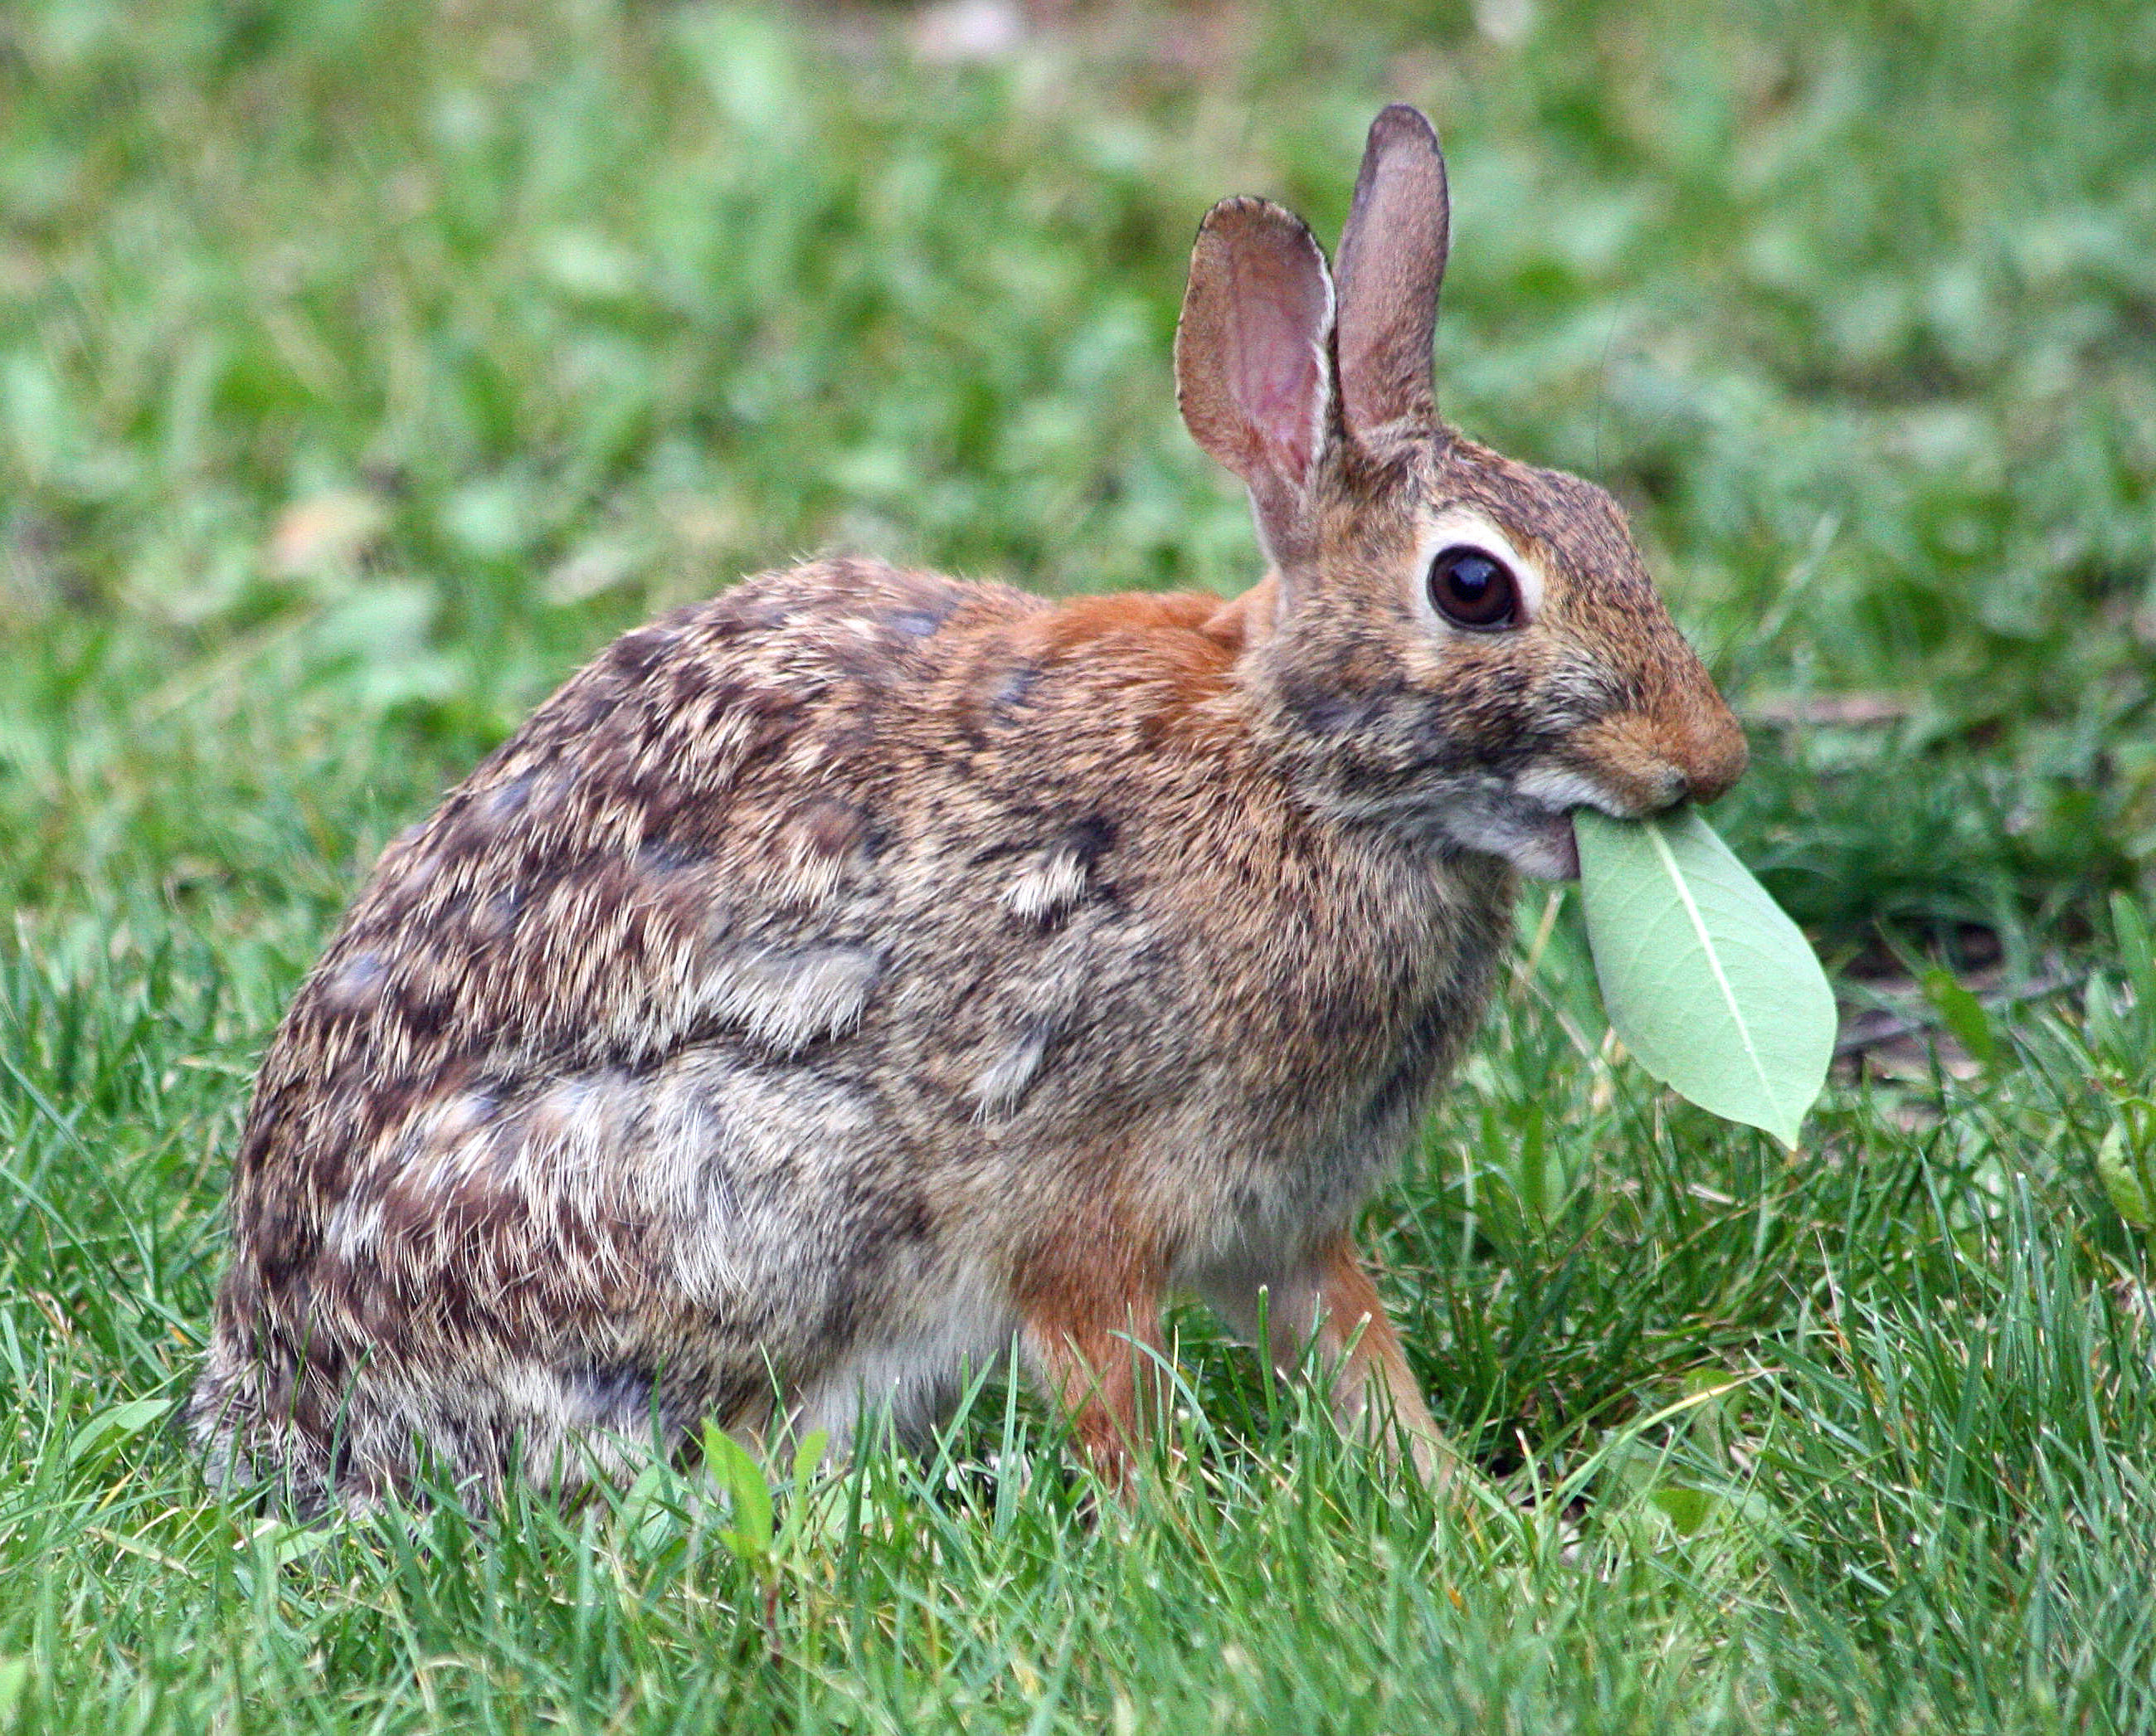 Cottontail rabbit photo